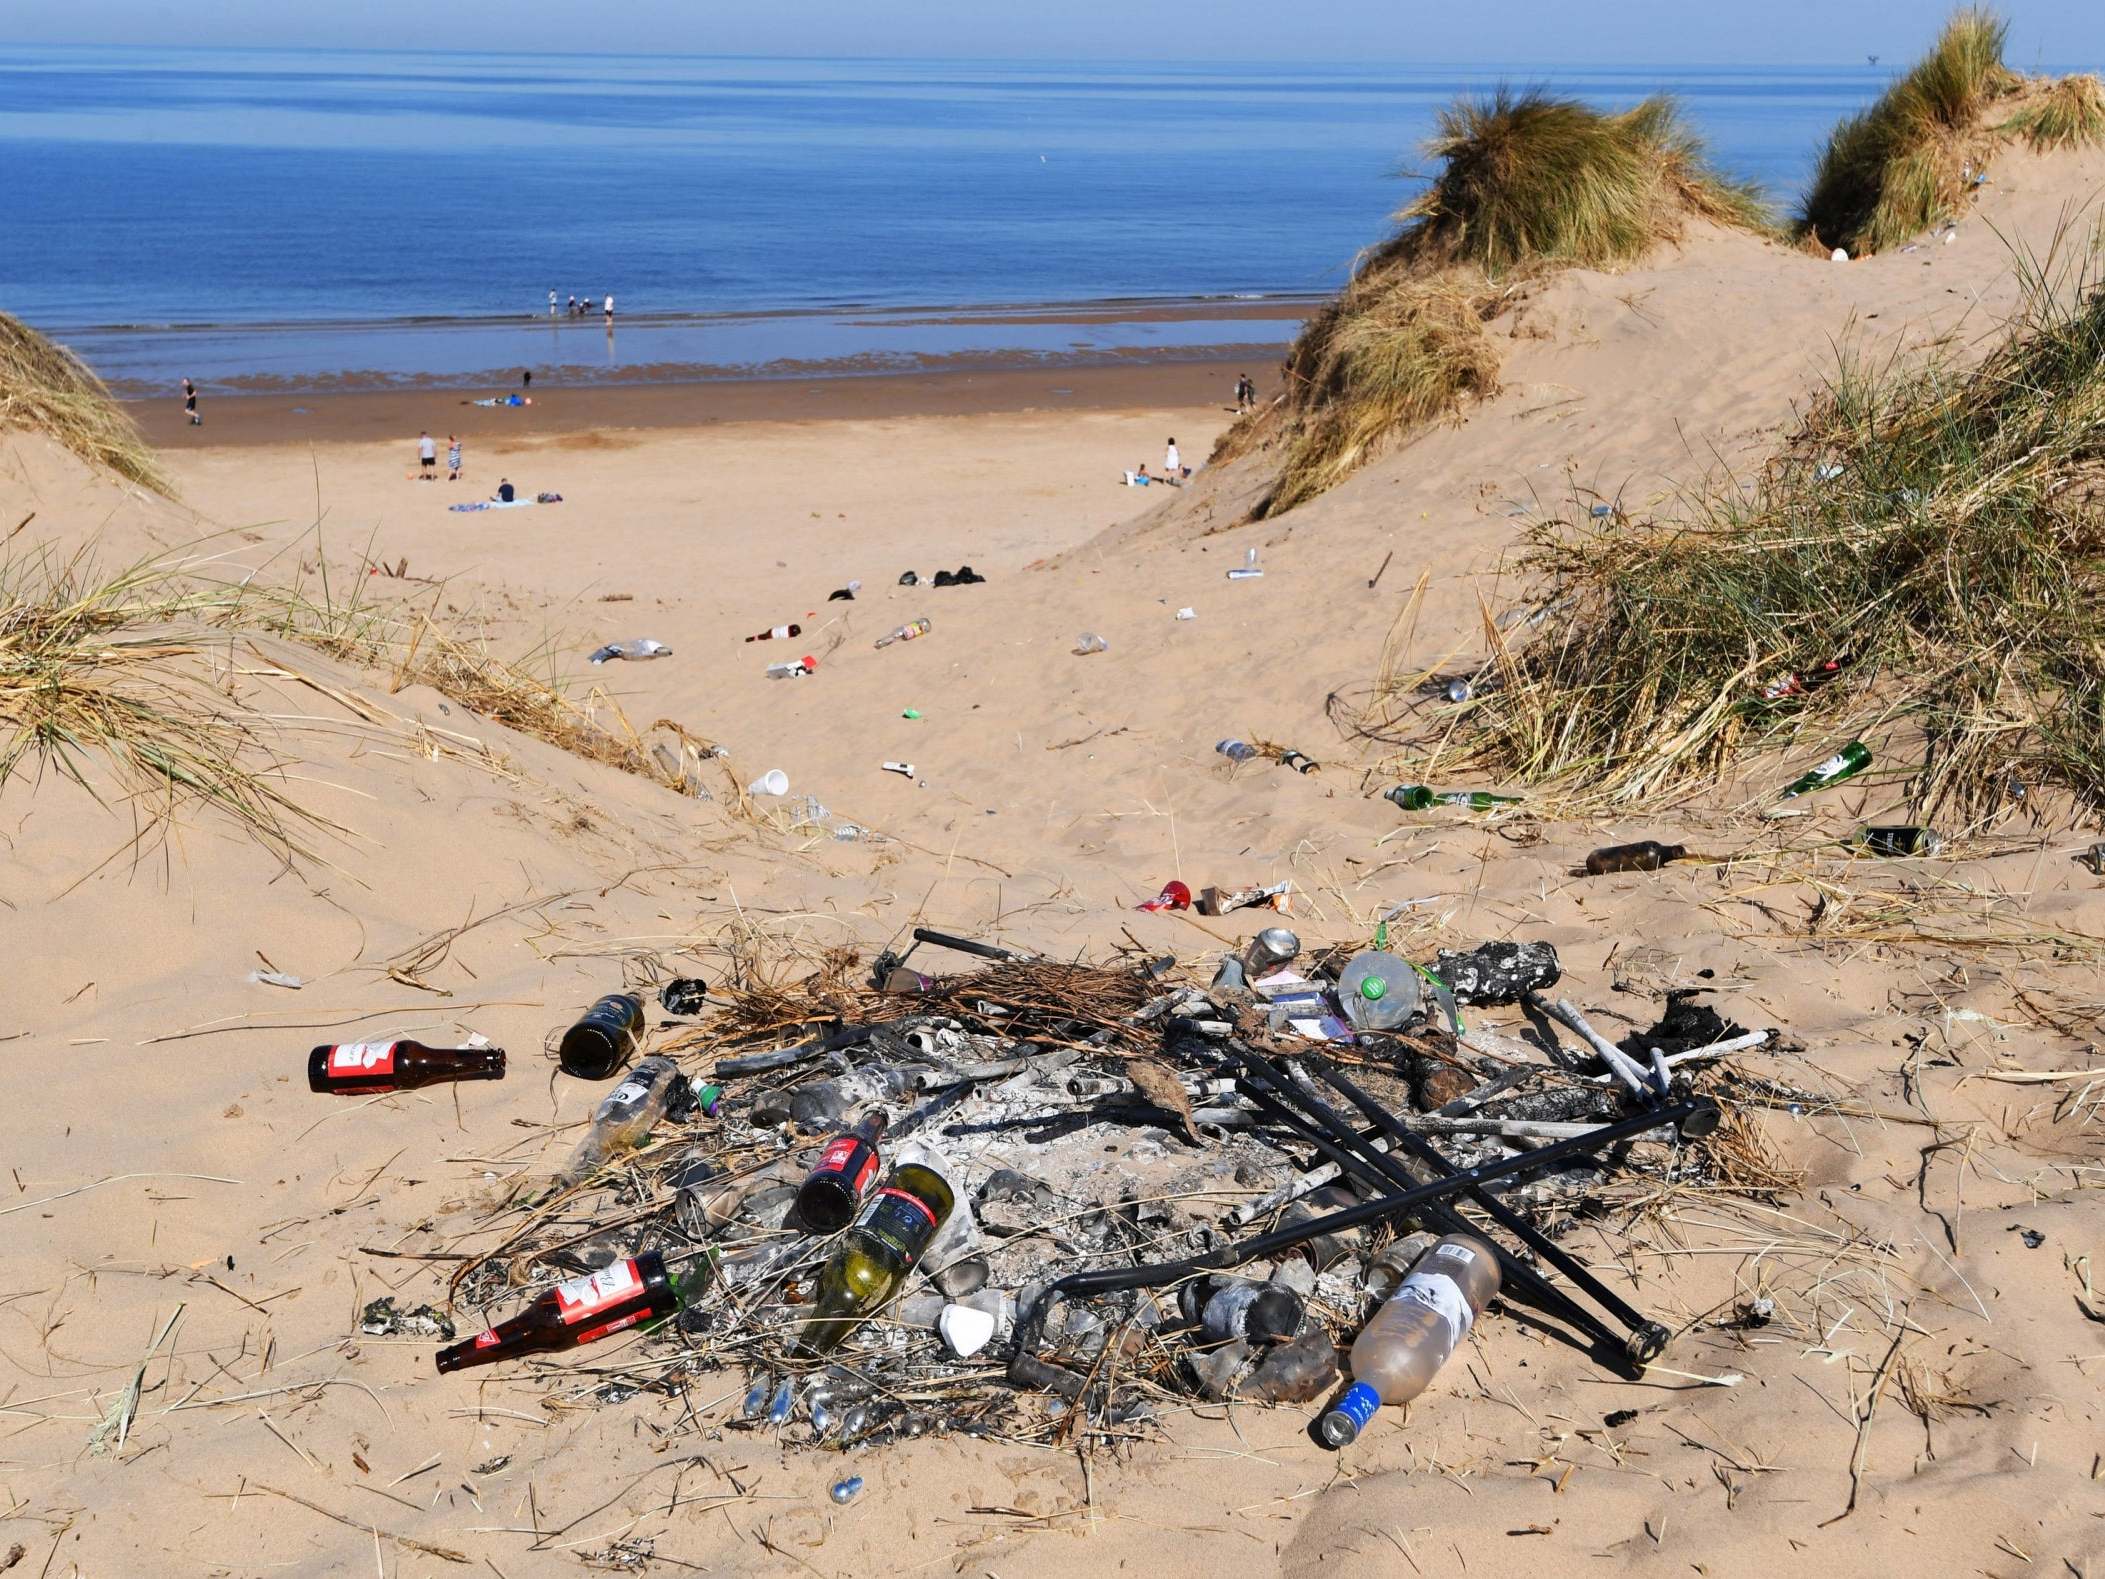 File image of litter left at Formby Beach sand dunes in Merseyside during the coronavirus lockdown, 17 June 2020.